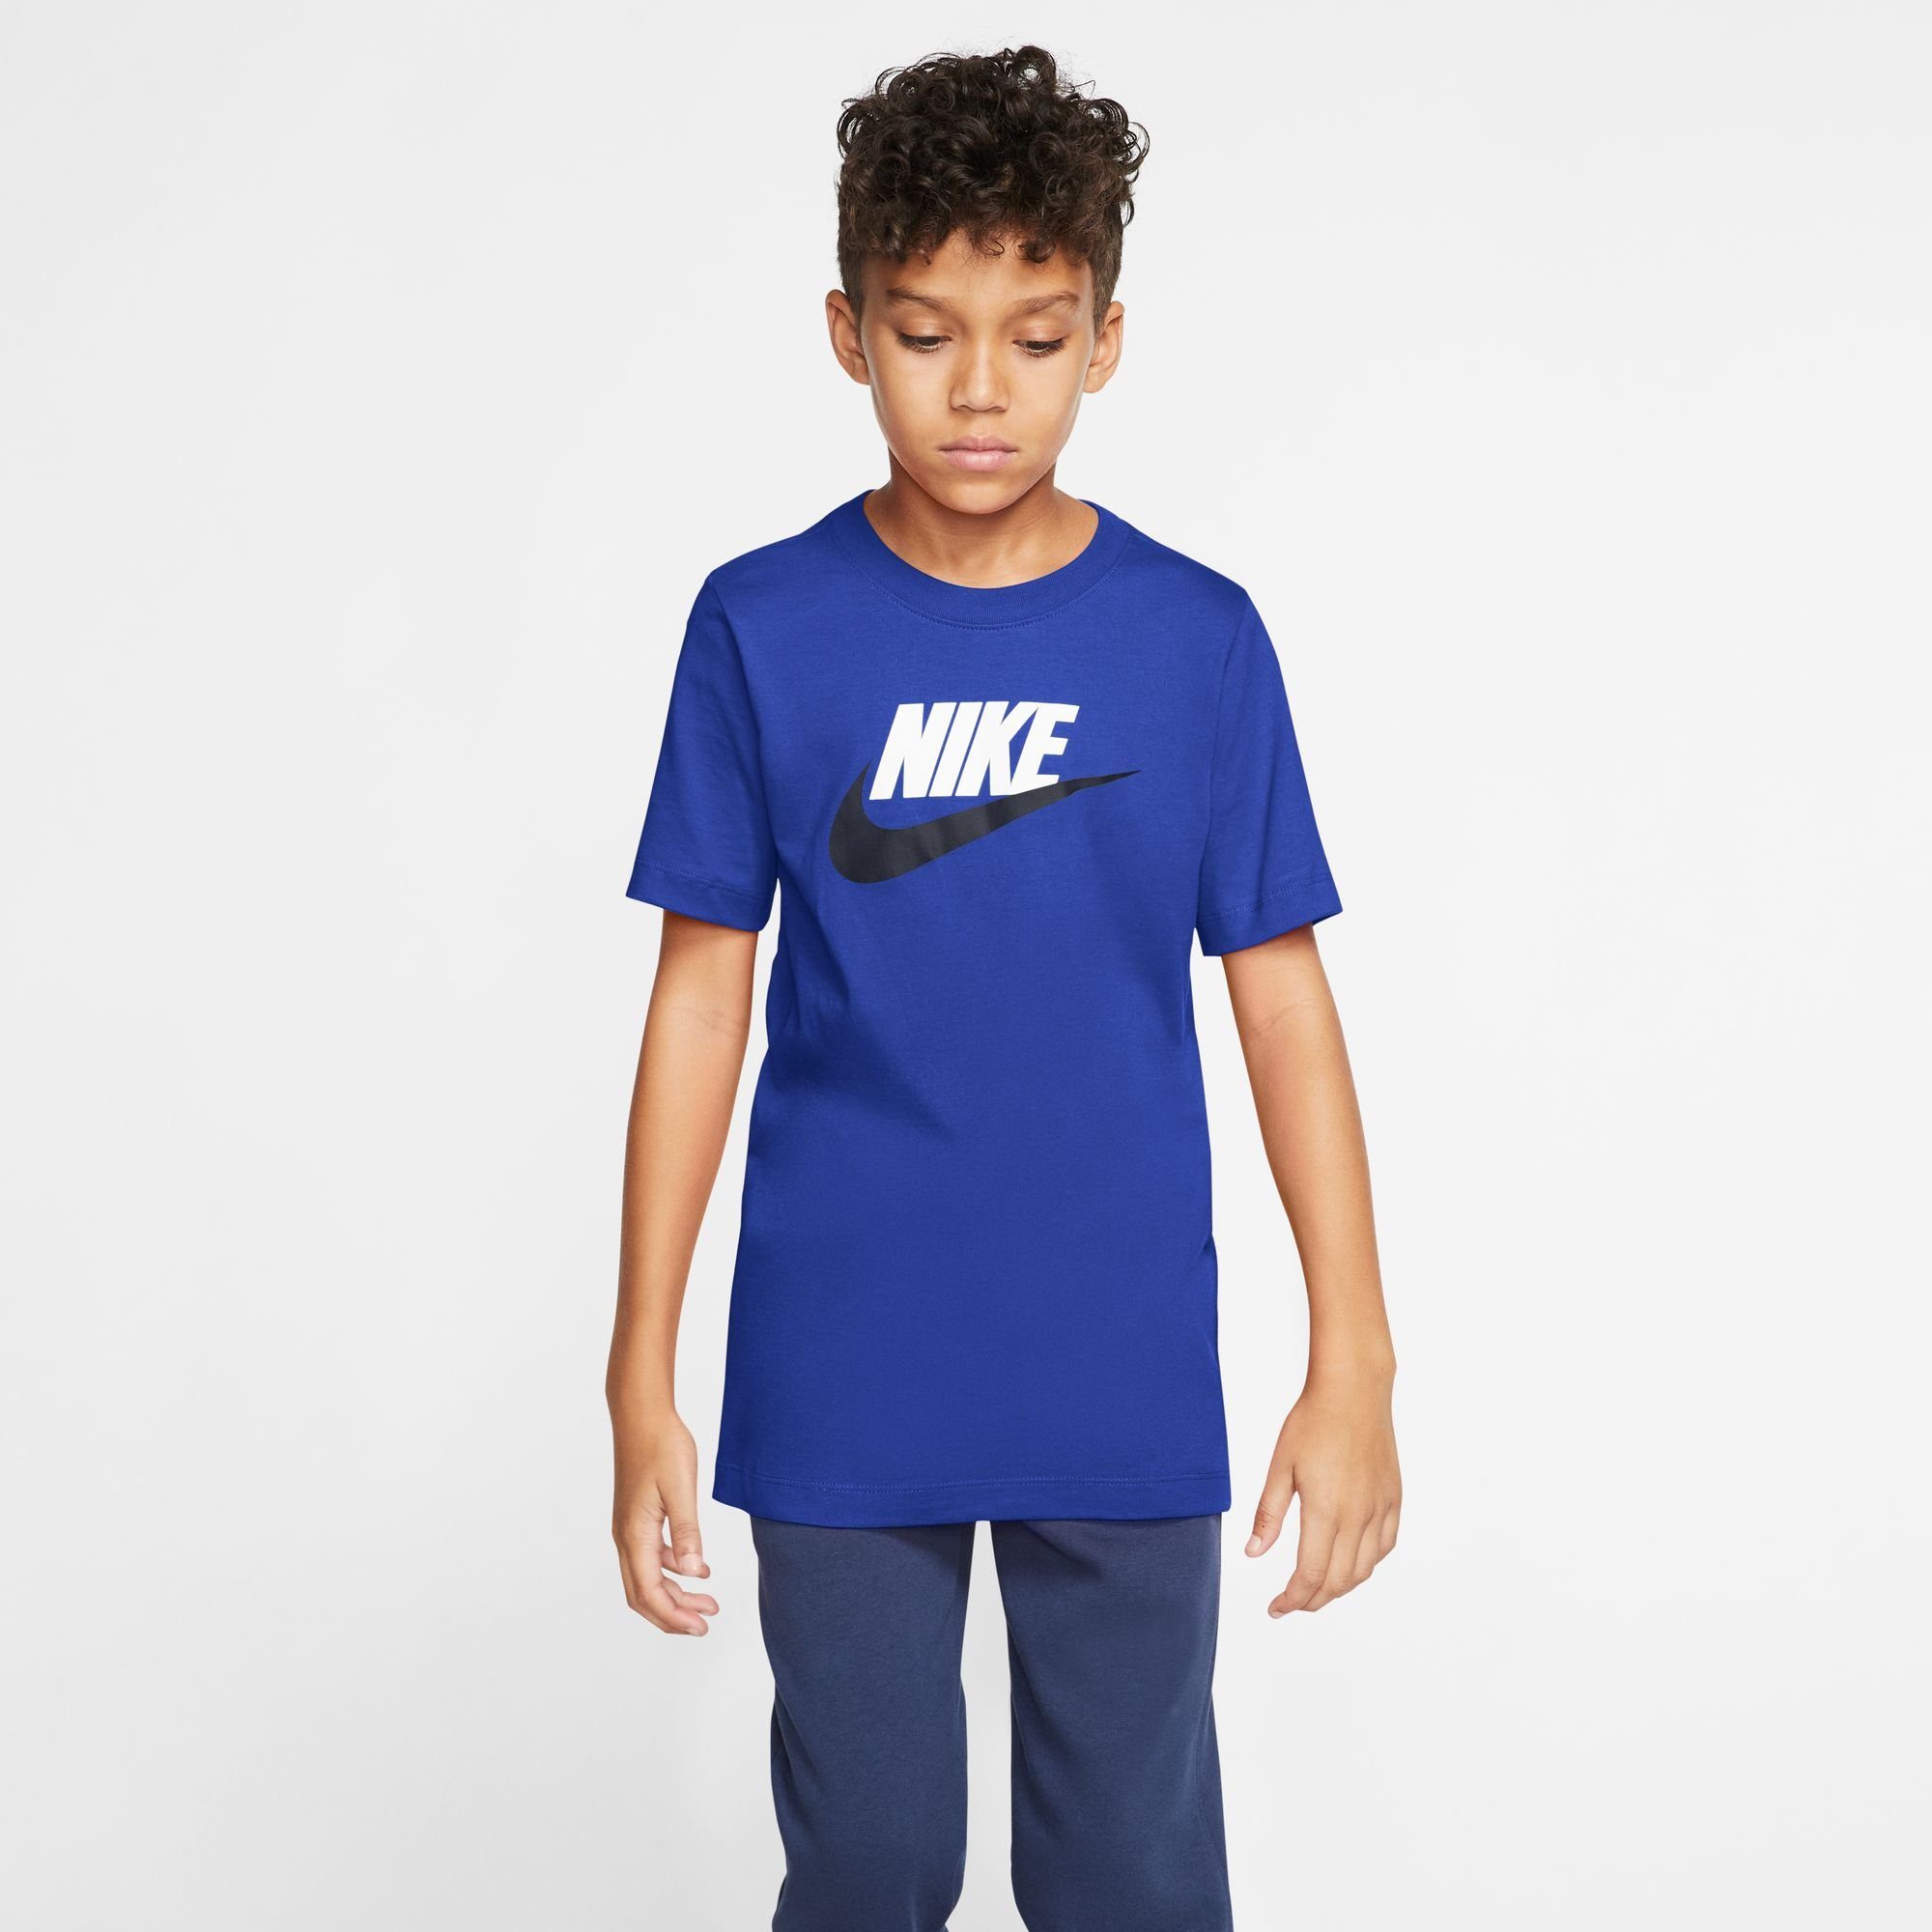 COTTON T-SHIRT T-Shirt KIDS' BIG Nike NAVY GAME Sportswear ROYAL/MIDNIGHT